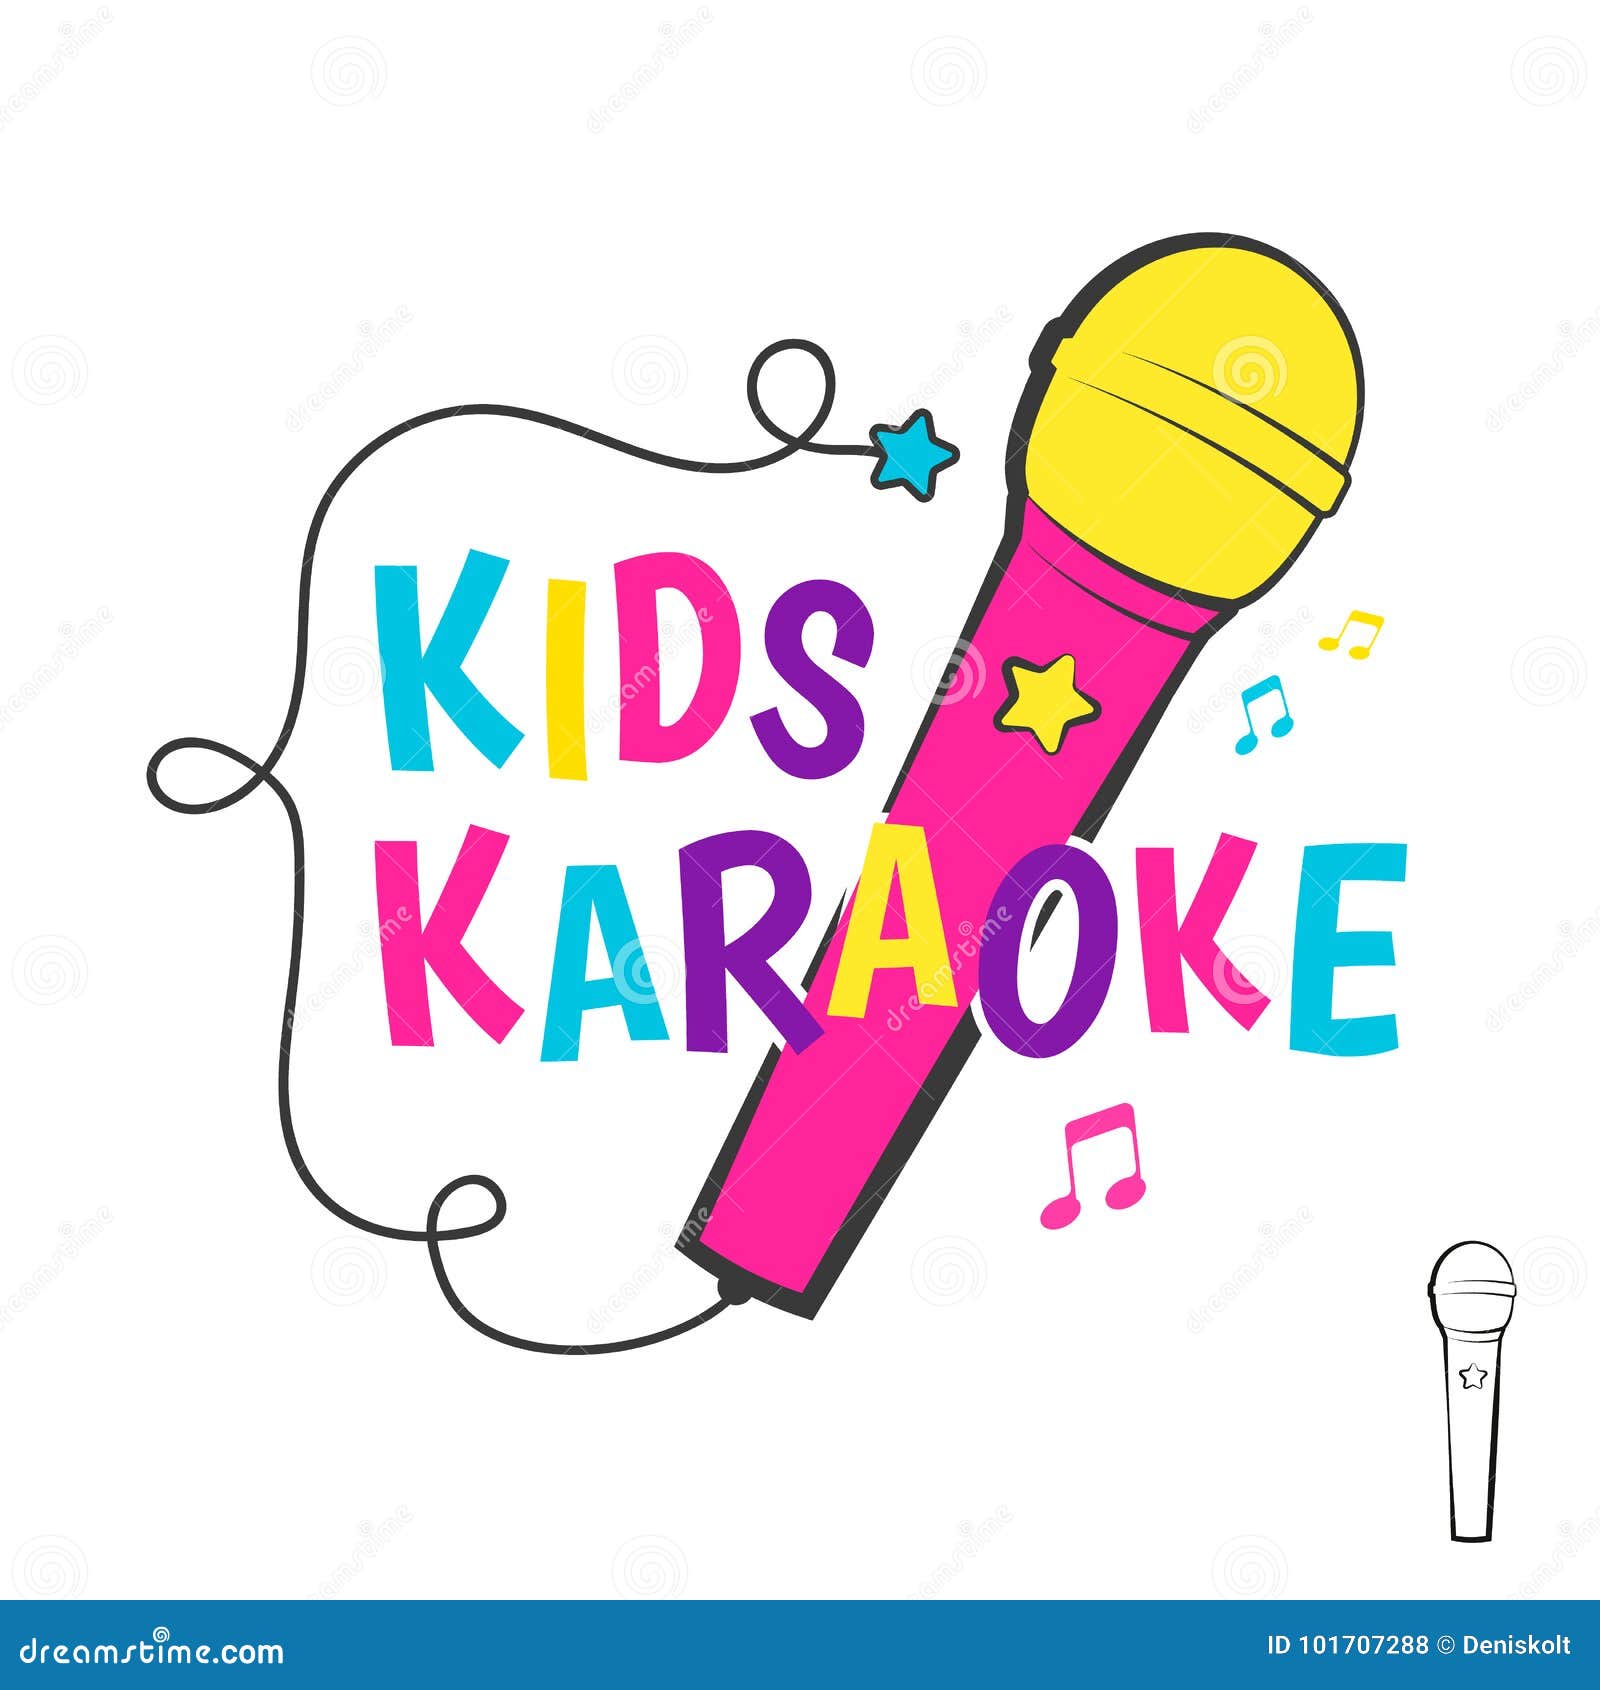 Kids karaoke emblem stock vector. Illustration of logo - 101707288